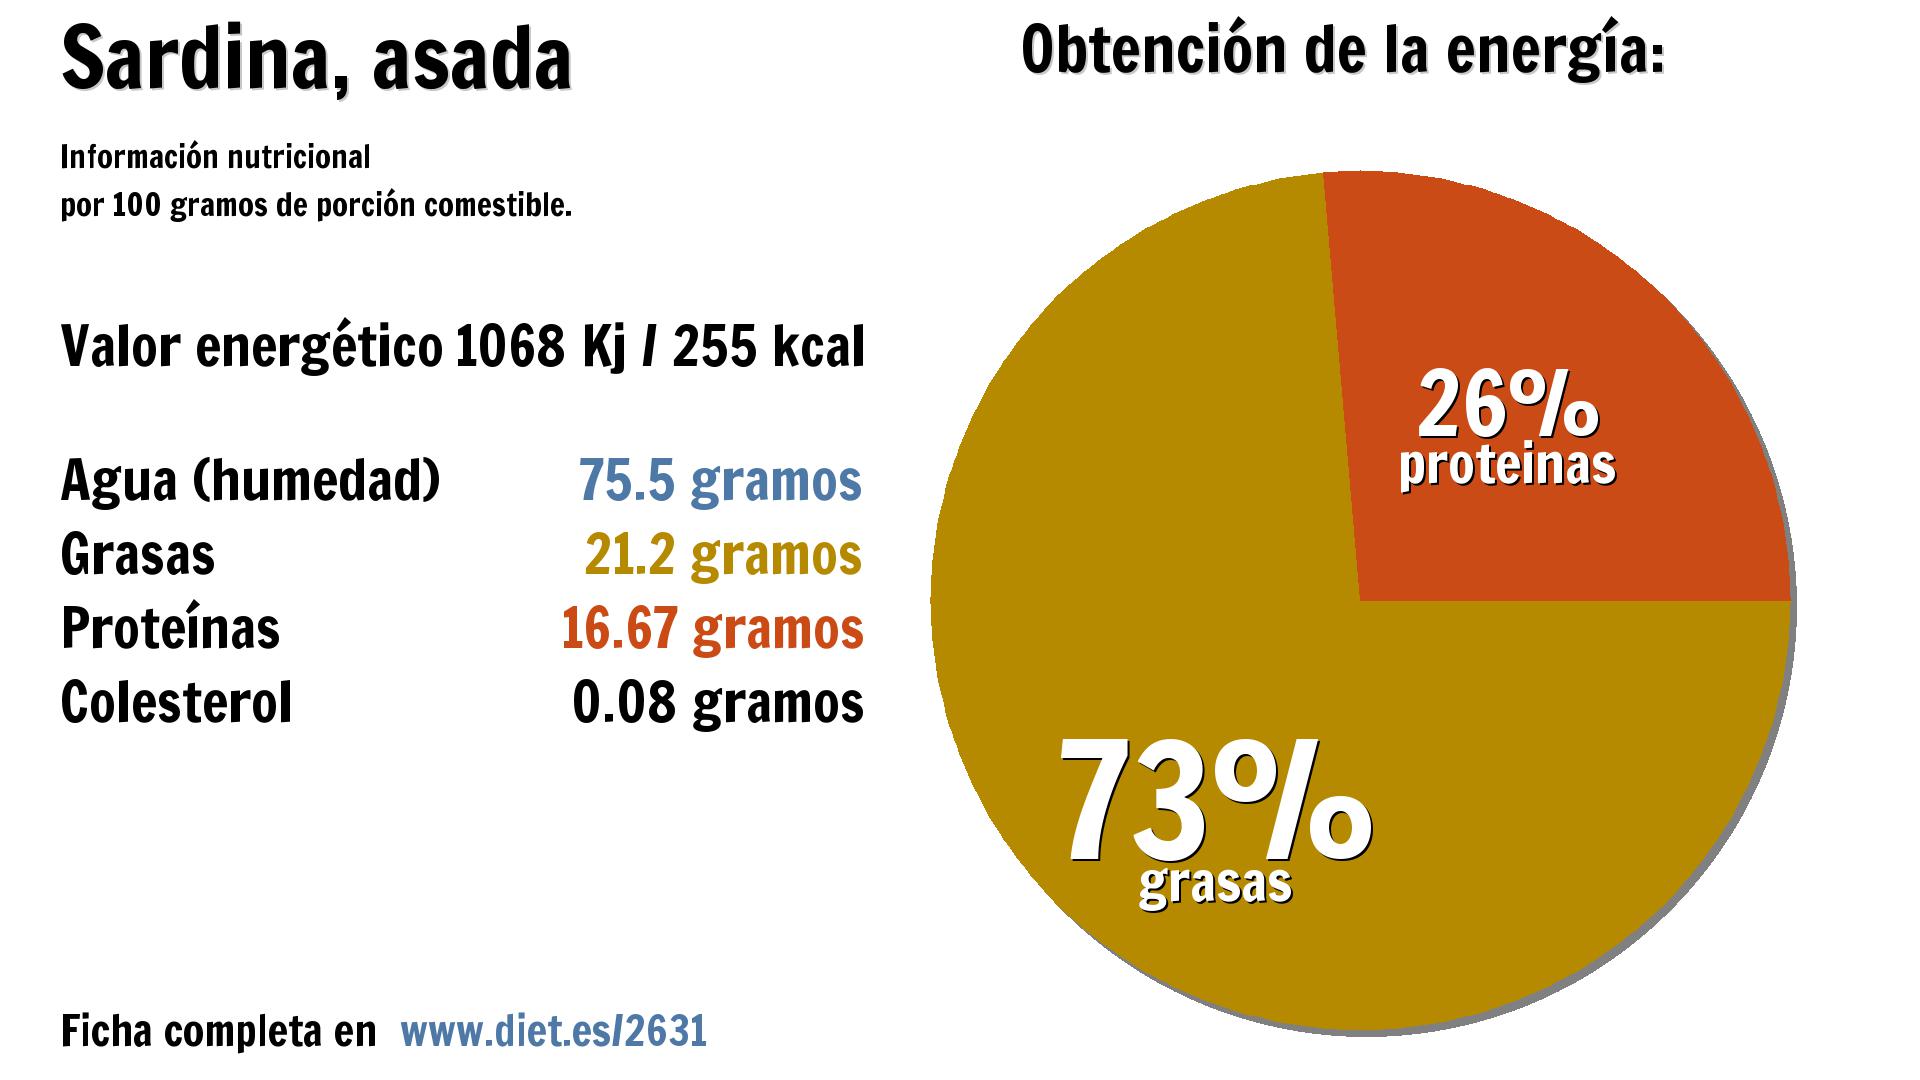 Sardina, asada: energía 1068 Kj, agua 76 g., grasas 21 g. y proteínas 17 g.